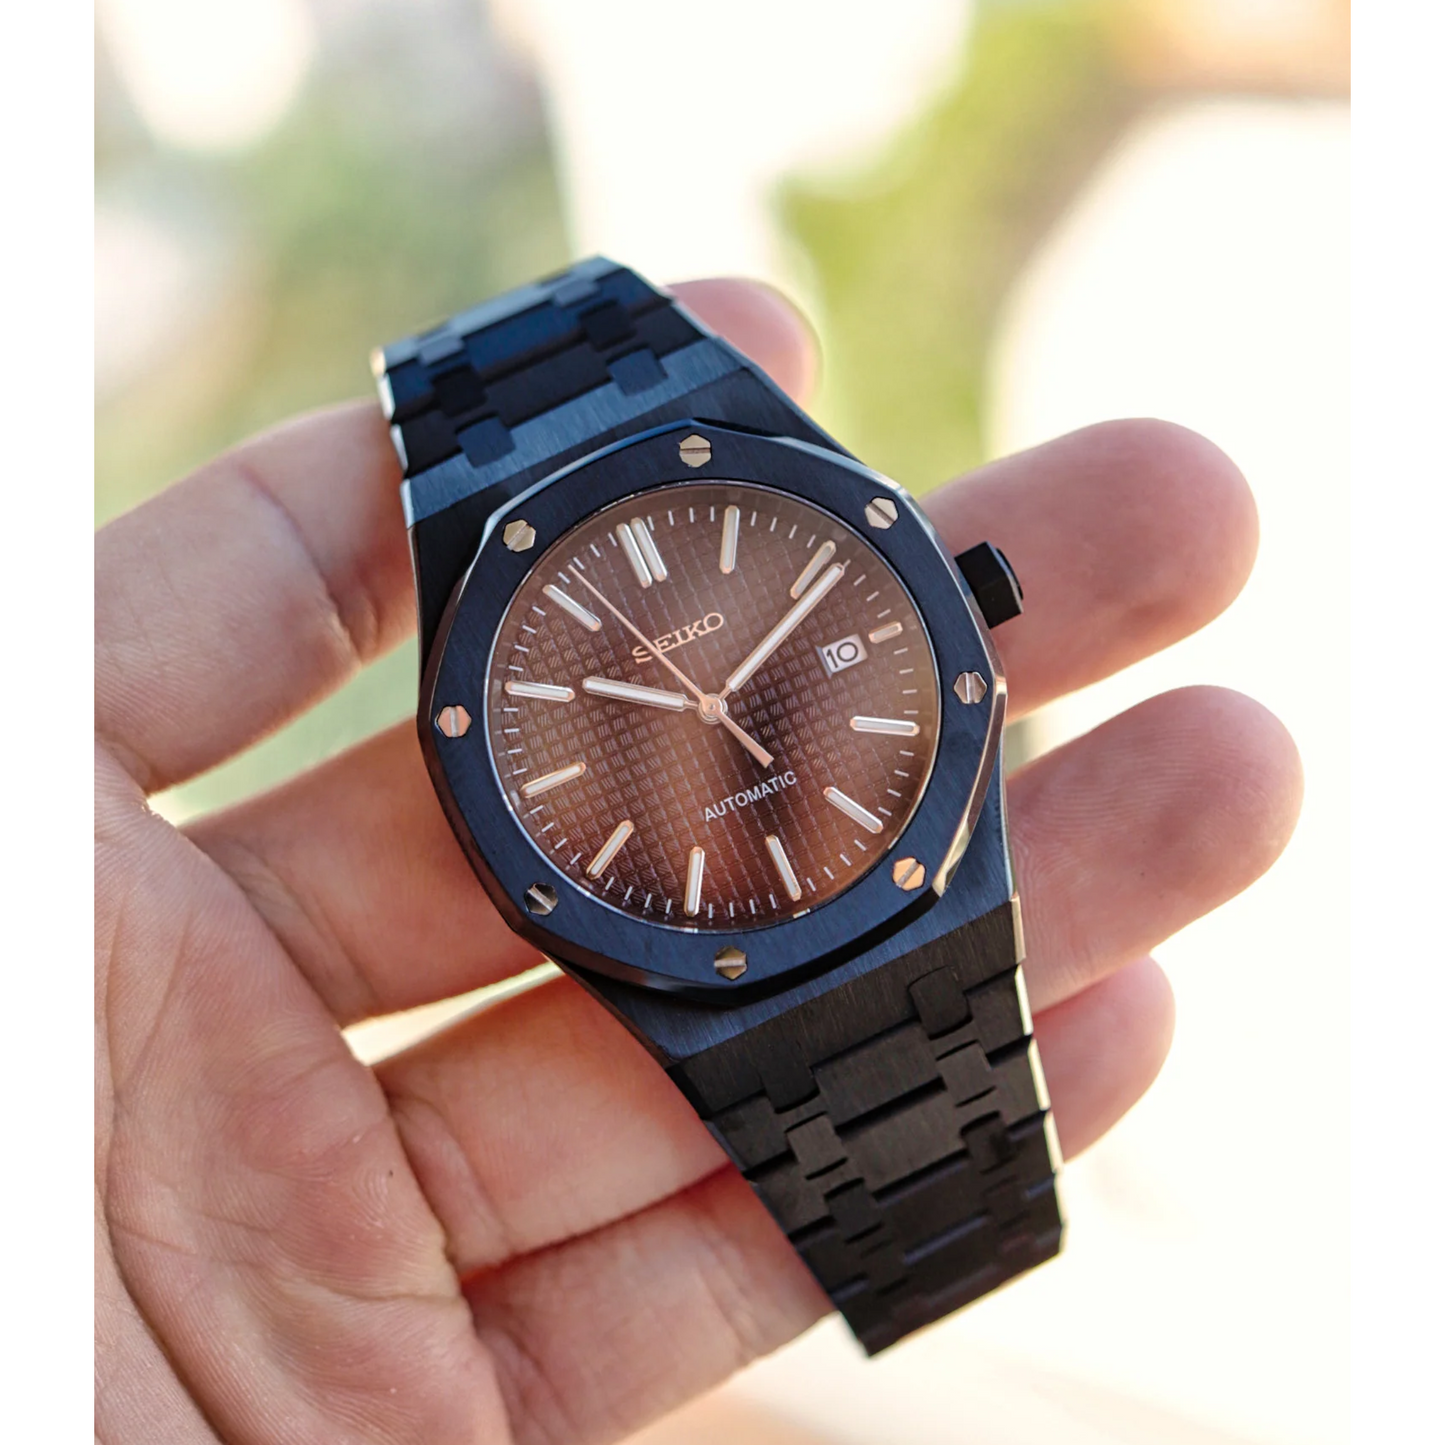 Seiko Mod Royal Oak Full Black Automatic Watch